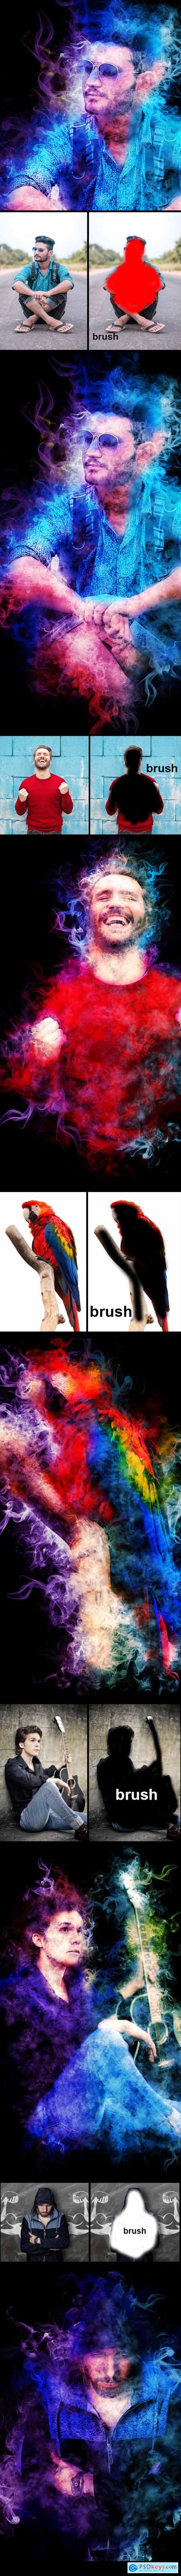 GraphicRiver Amazing Colored Smoke Photoshop Action Vol 2